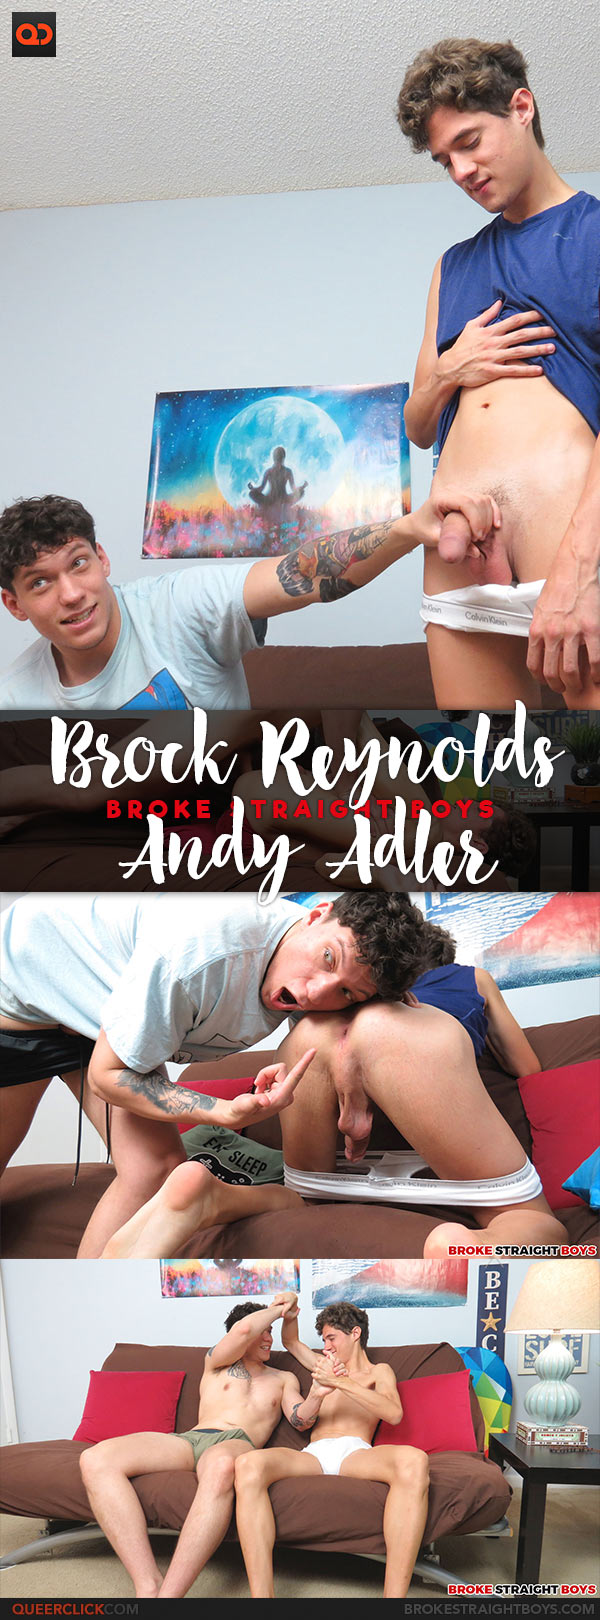 Broke Straight Boys: Brock Reynolds Fucks Andy Adler - 'Brock Gets Access to Andy’s Pink Hole'